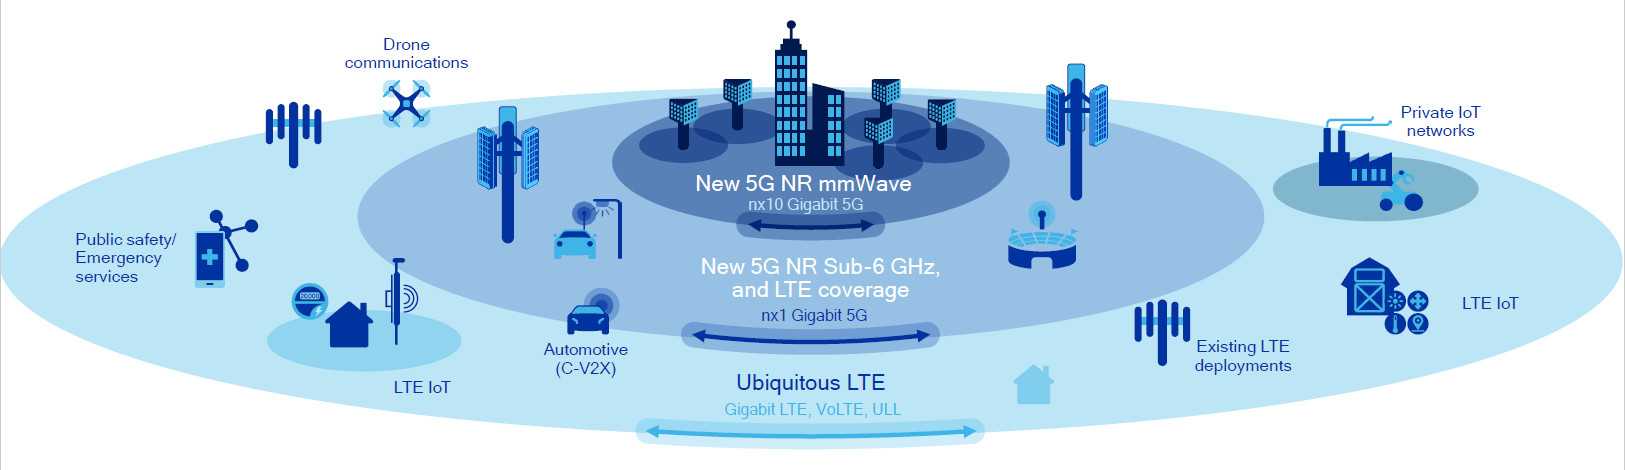 Pai 5g 5g. 5g vs LTE. Технология LTE. Частная сеть LTE. 5g от LTE.